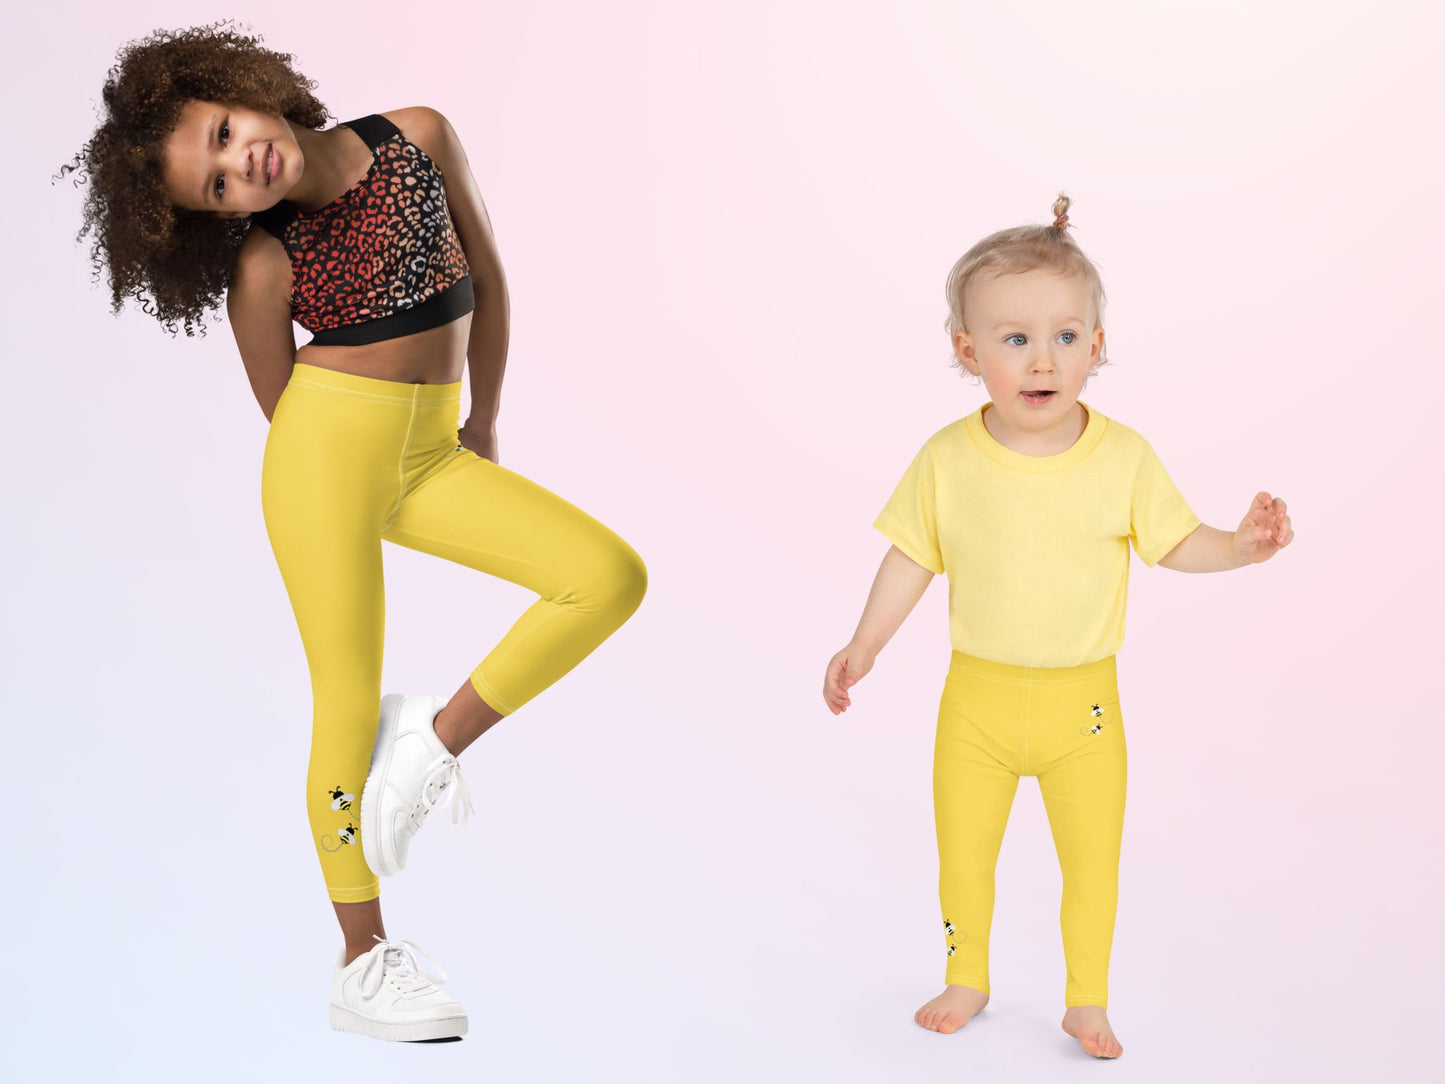 Winnie the Pooh Unisex Kids Athletic Costume, Rash Guard, T-Shirt, Leggings, Gift for Her, Halloween, Cosplay, Princess, Birthday Gift,